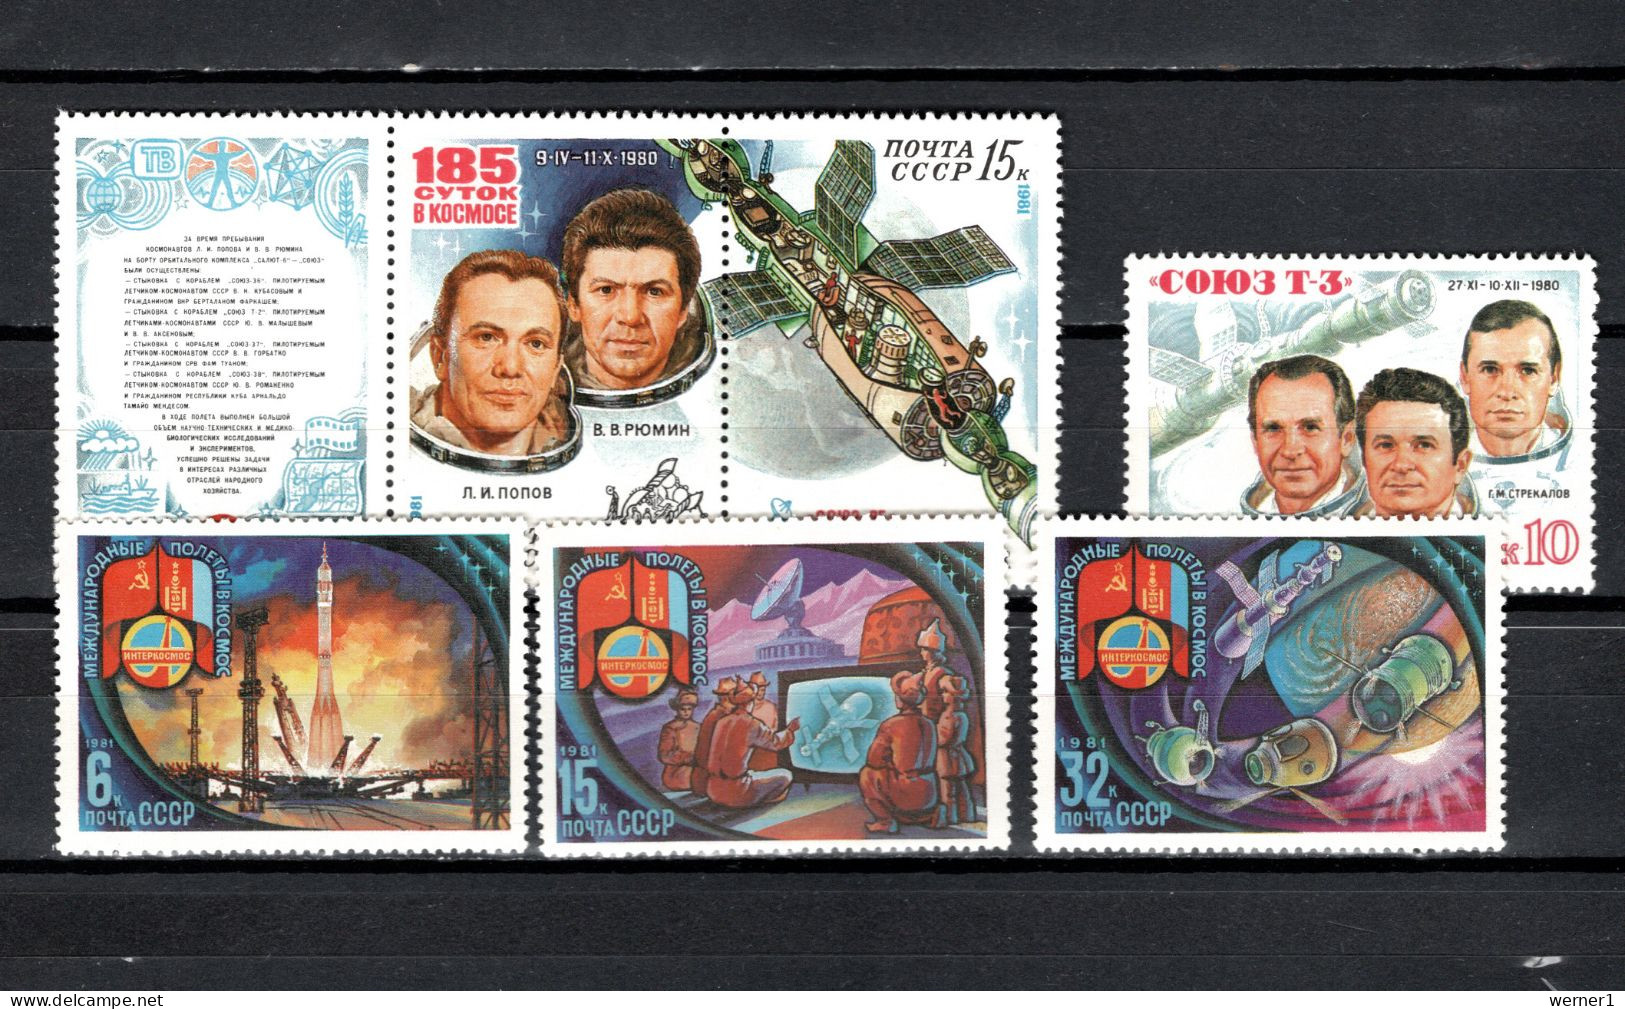 USSR Russia 1981 Space, Saljut 6, Soyuz T-3, Interkosmos 6 Stamps MNH - Russia & USSR